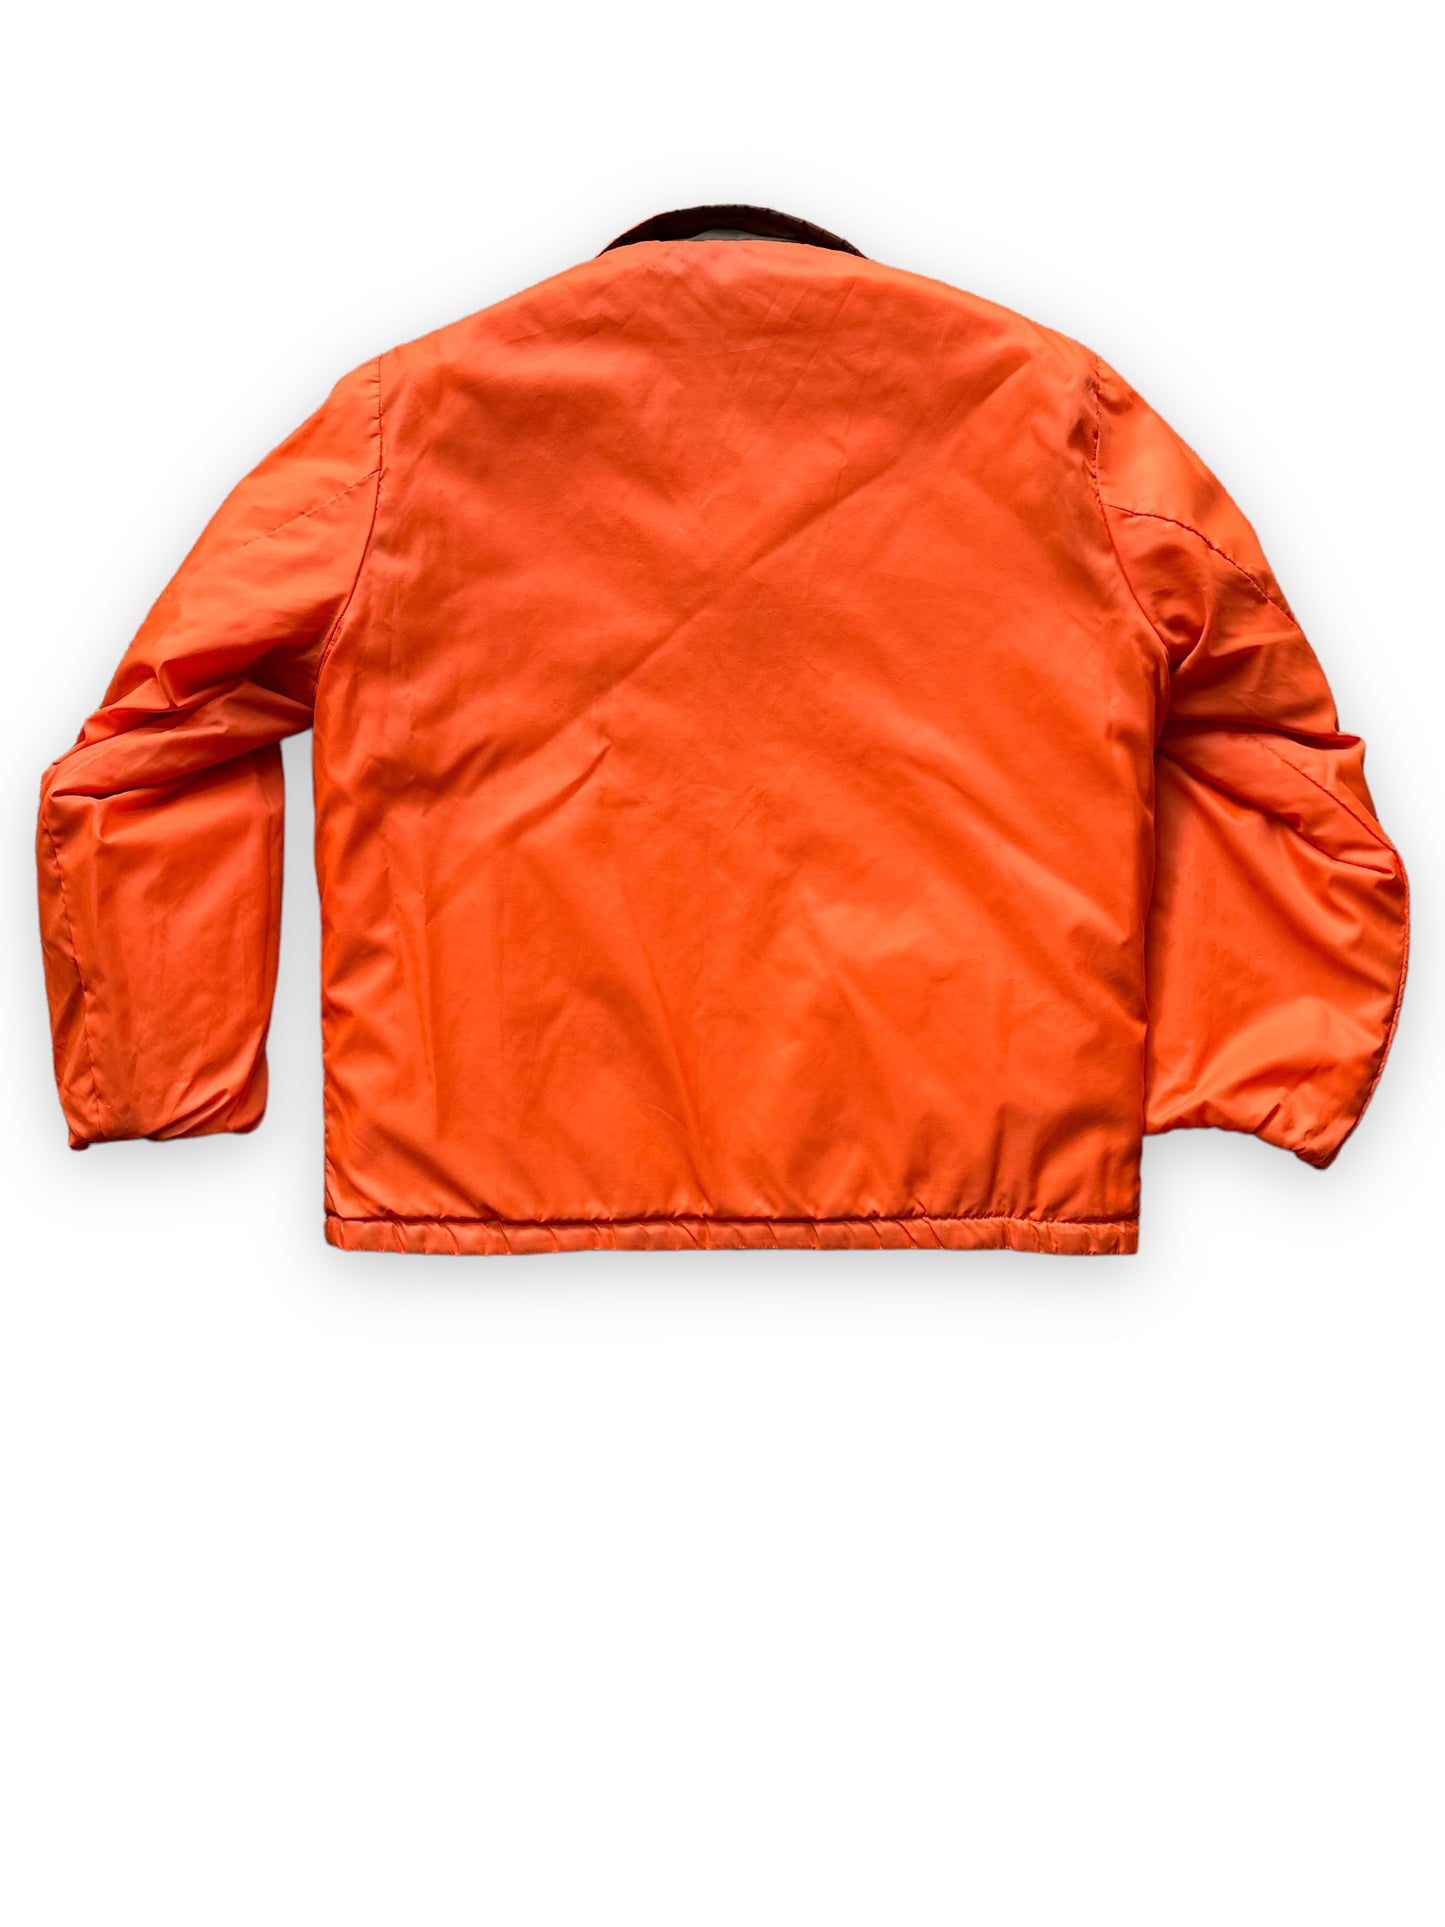 Orange Reversible Lining Rear View on Vintage Reversible Puffer Jacket SZ L | Vintage Puffer Jacket Seattle | Barn Owl Vintage Seattle